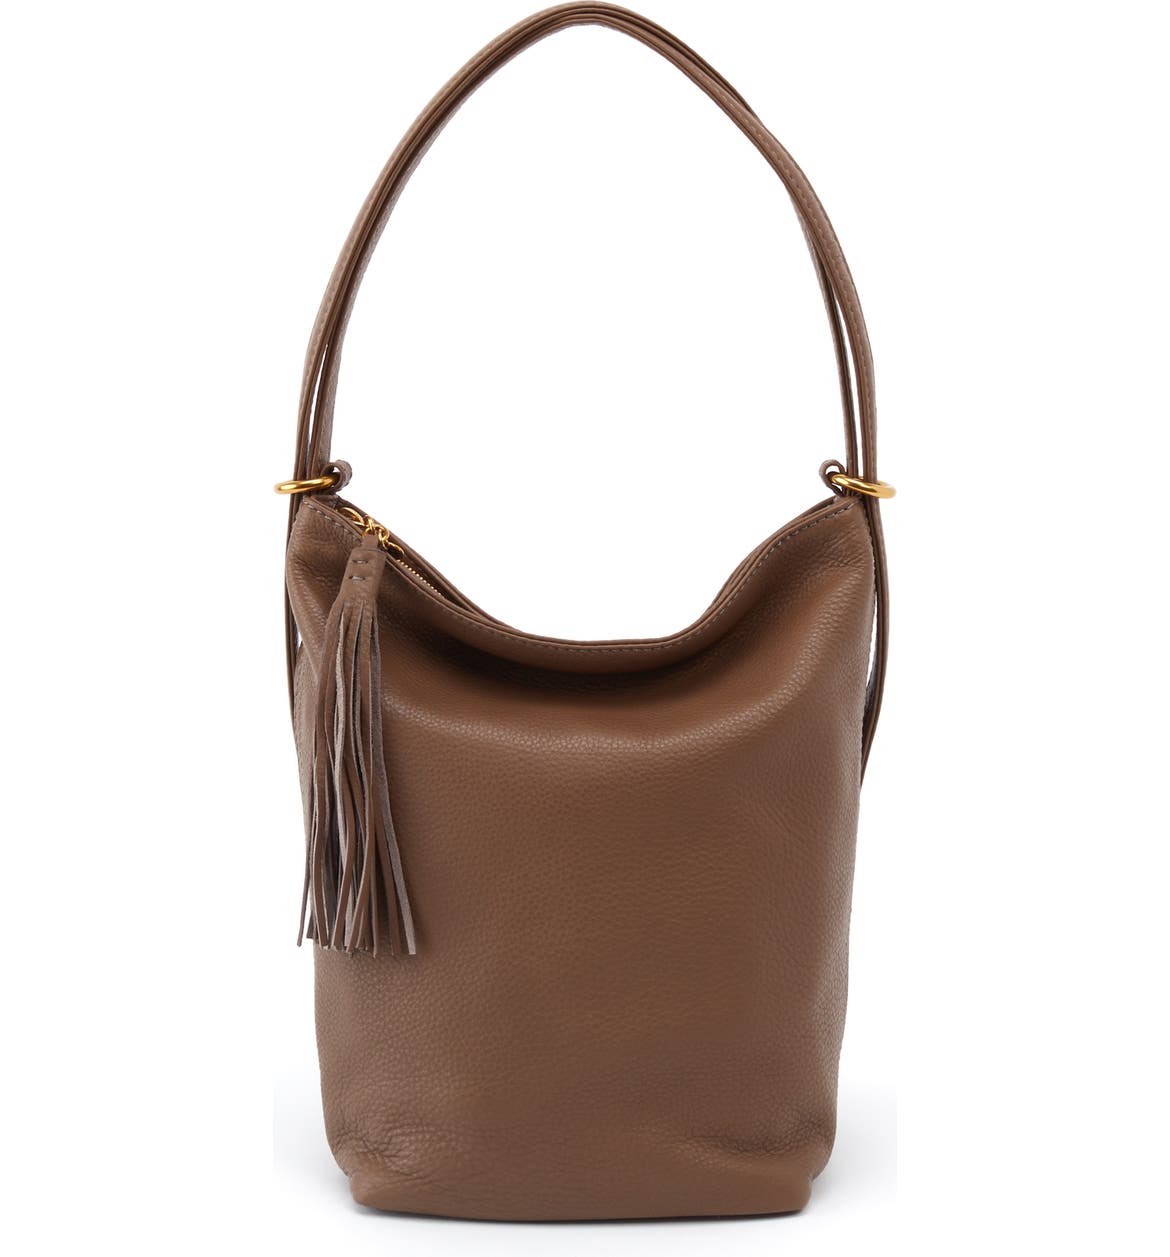 HOBO 'Blaze' Convertible Leather Shoulder Bag, Alternate, color, GRAYSTONE